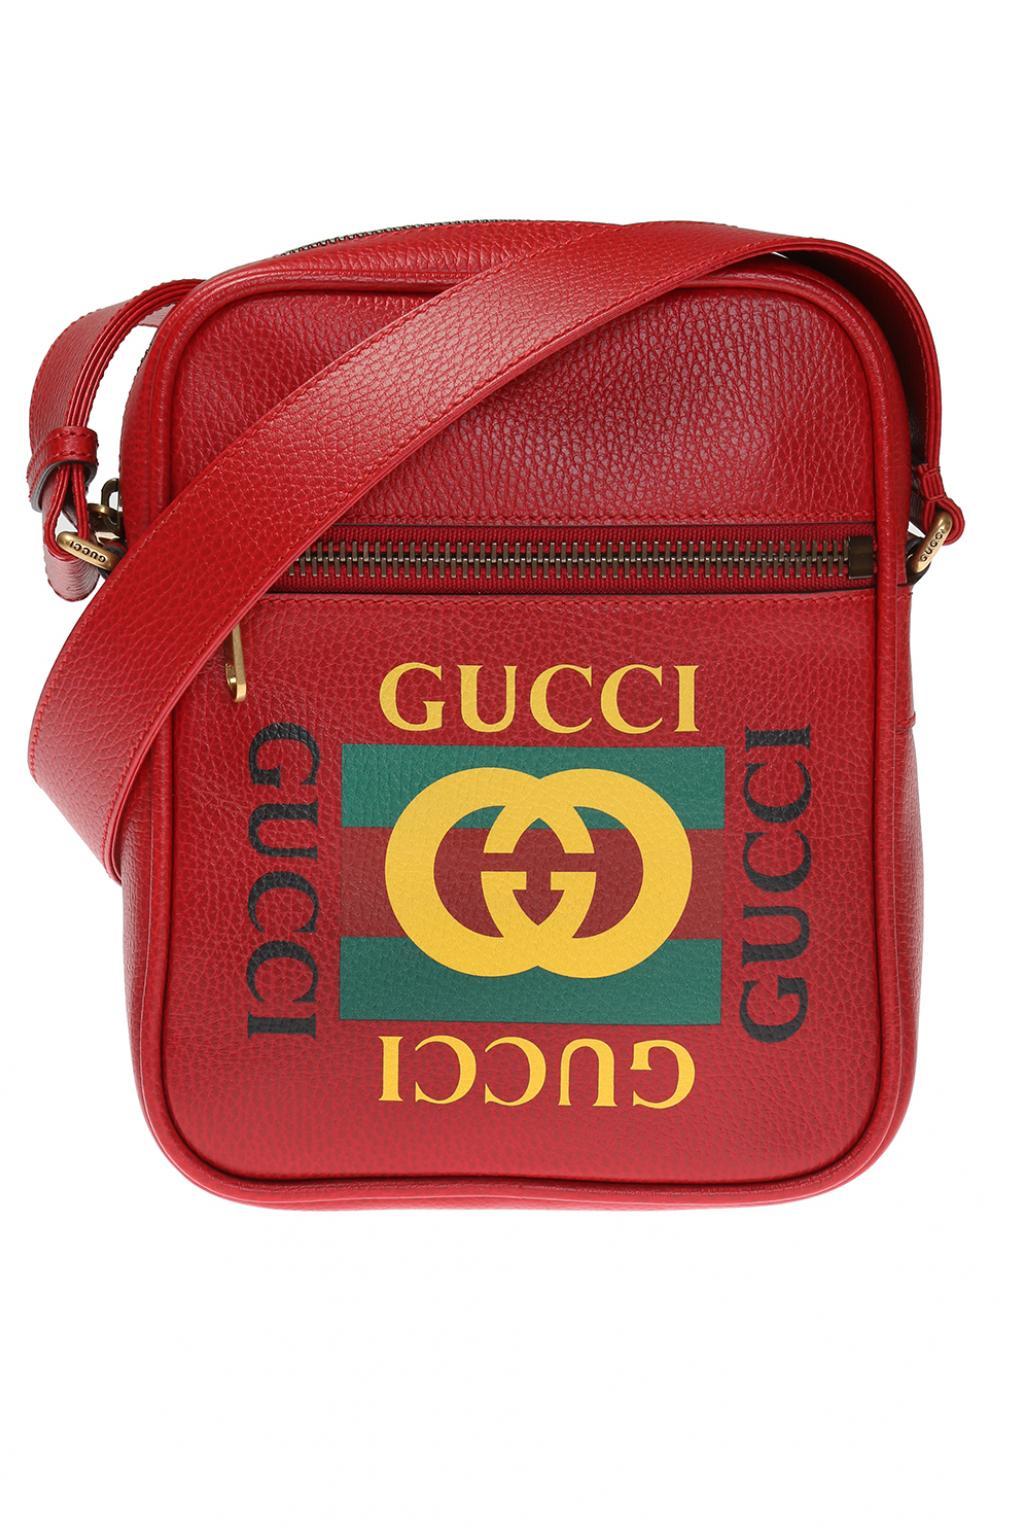 Gucci Purse Bag Logos For Sale | Paul Smith